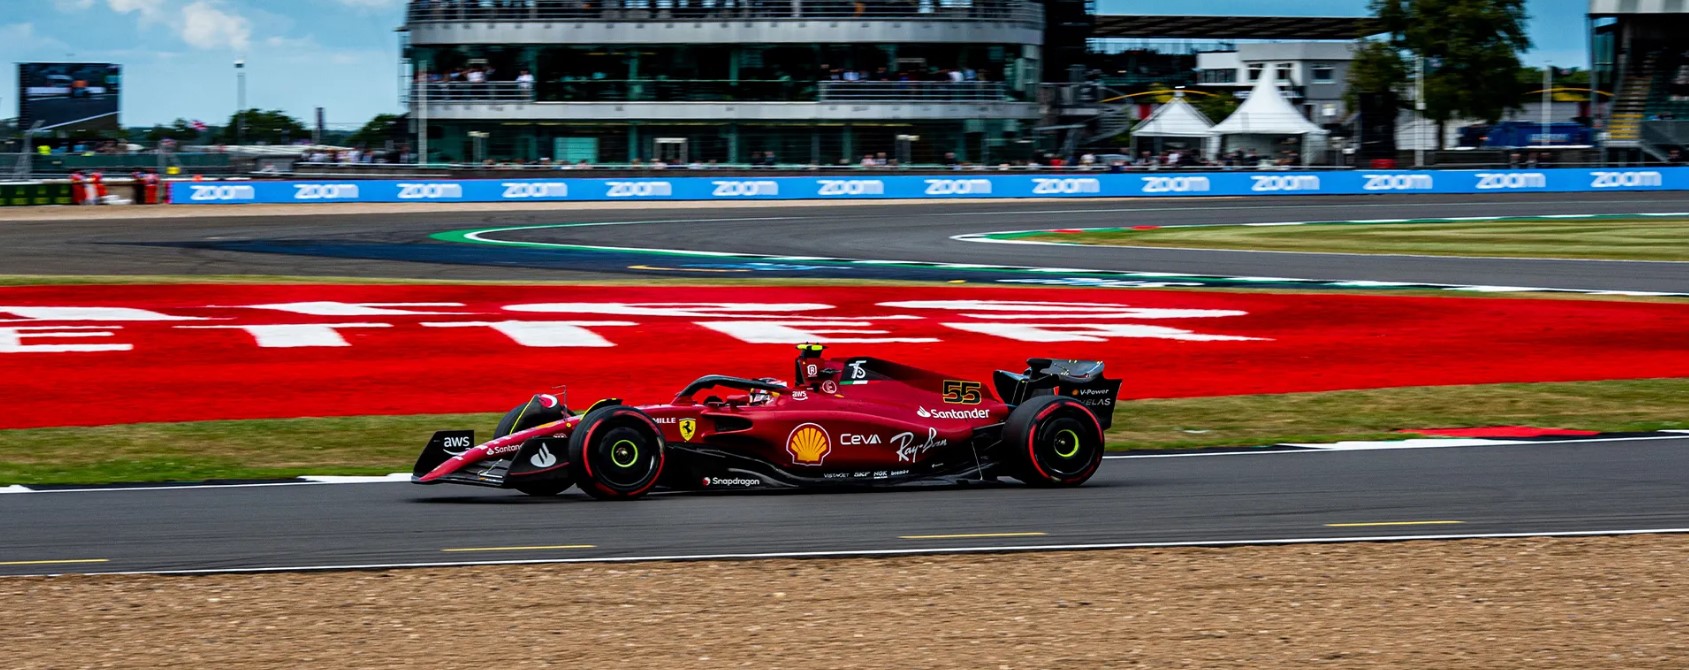 Ferrari aseguró a Leclerc hasta 2026